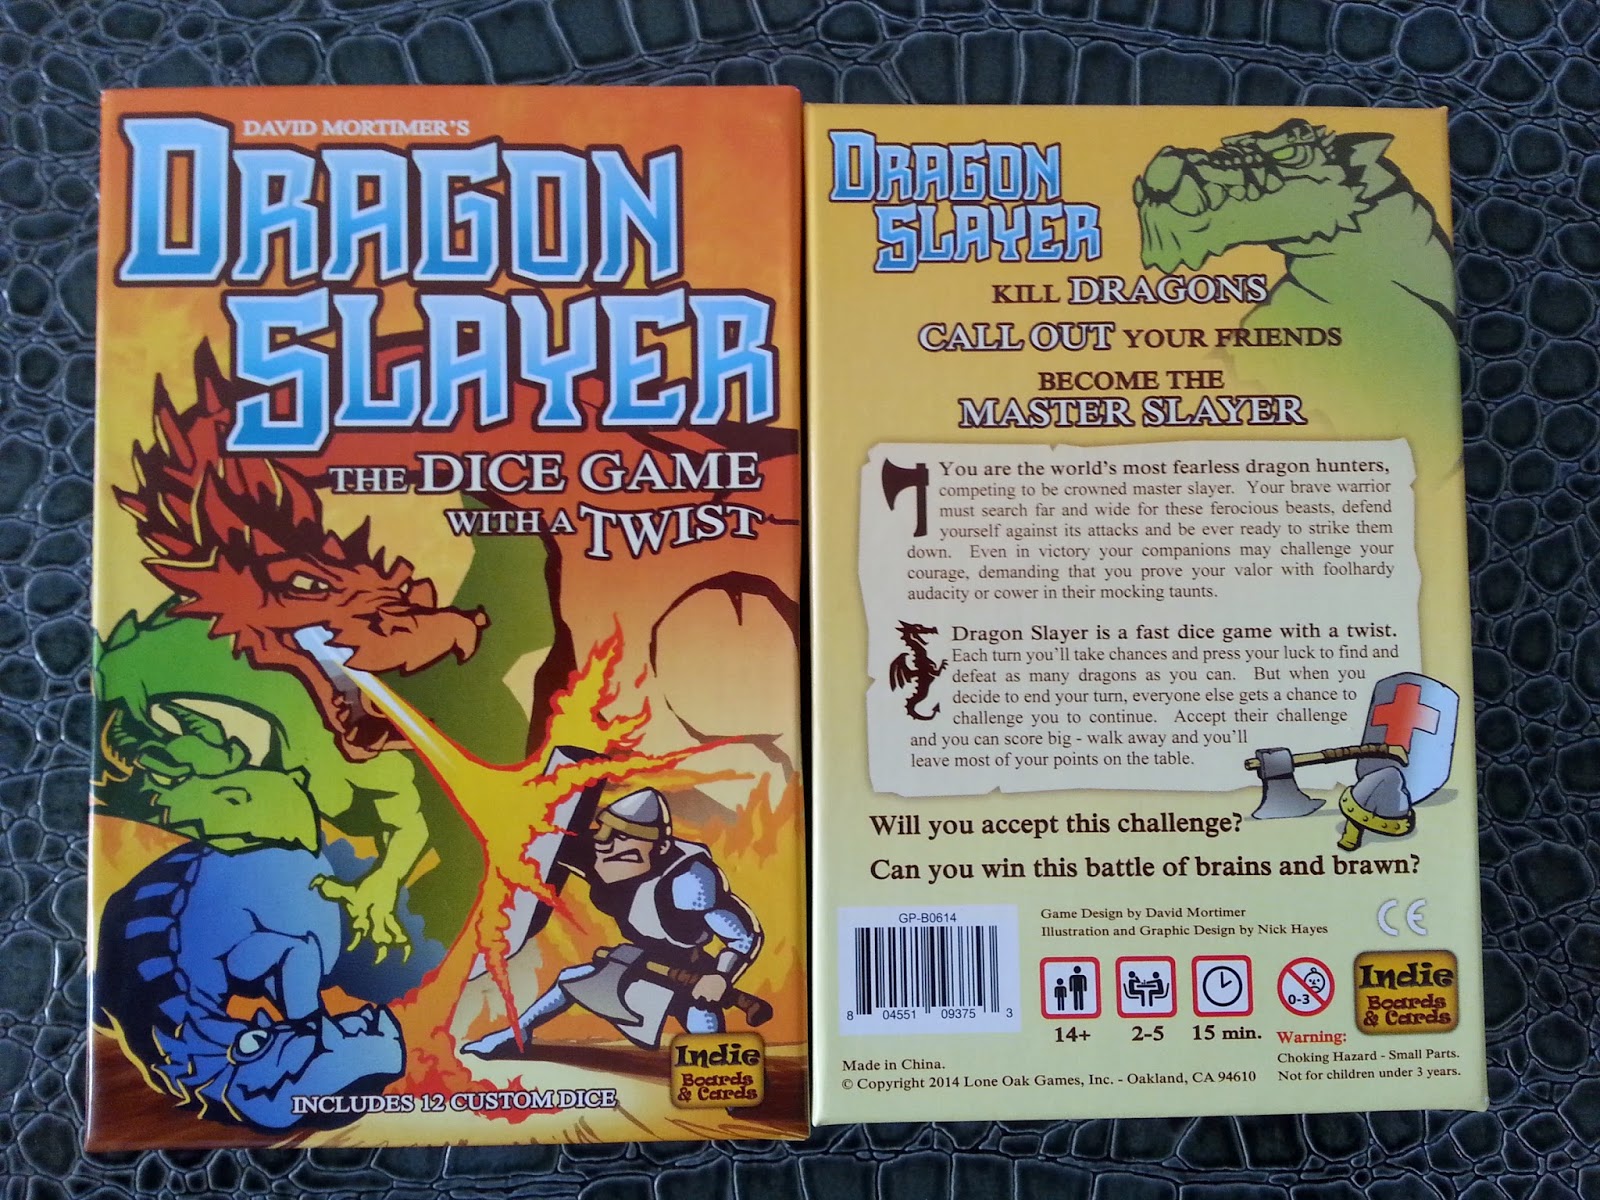 Dragonslayer, Board Game